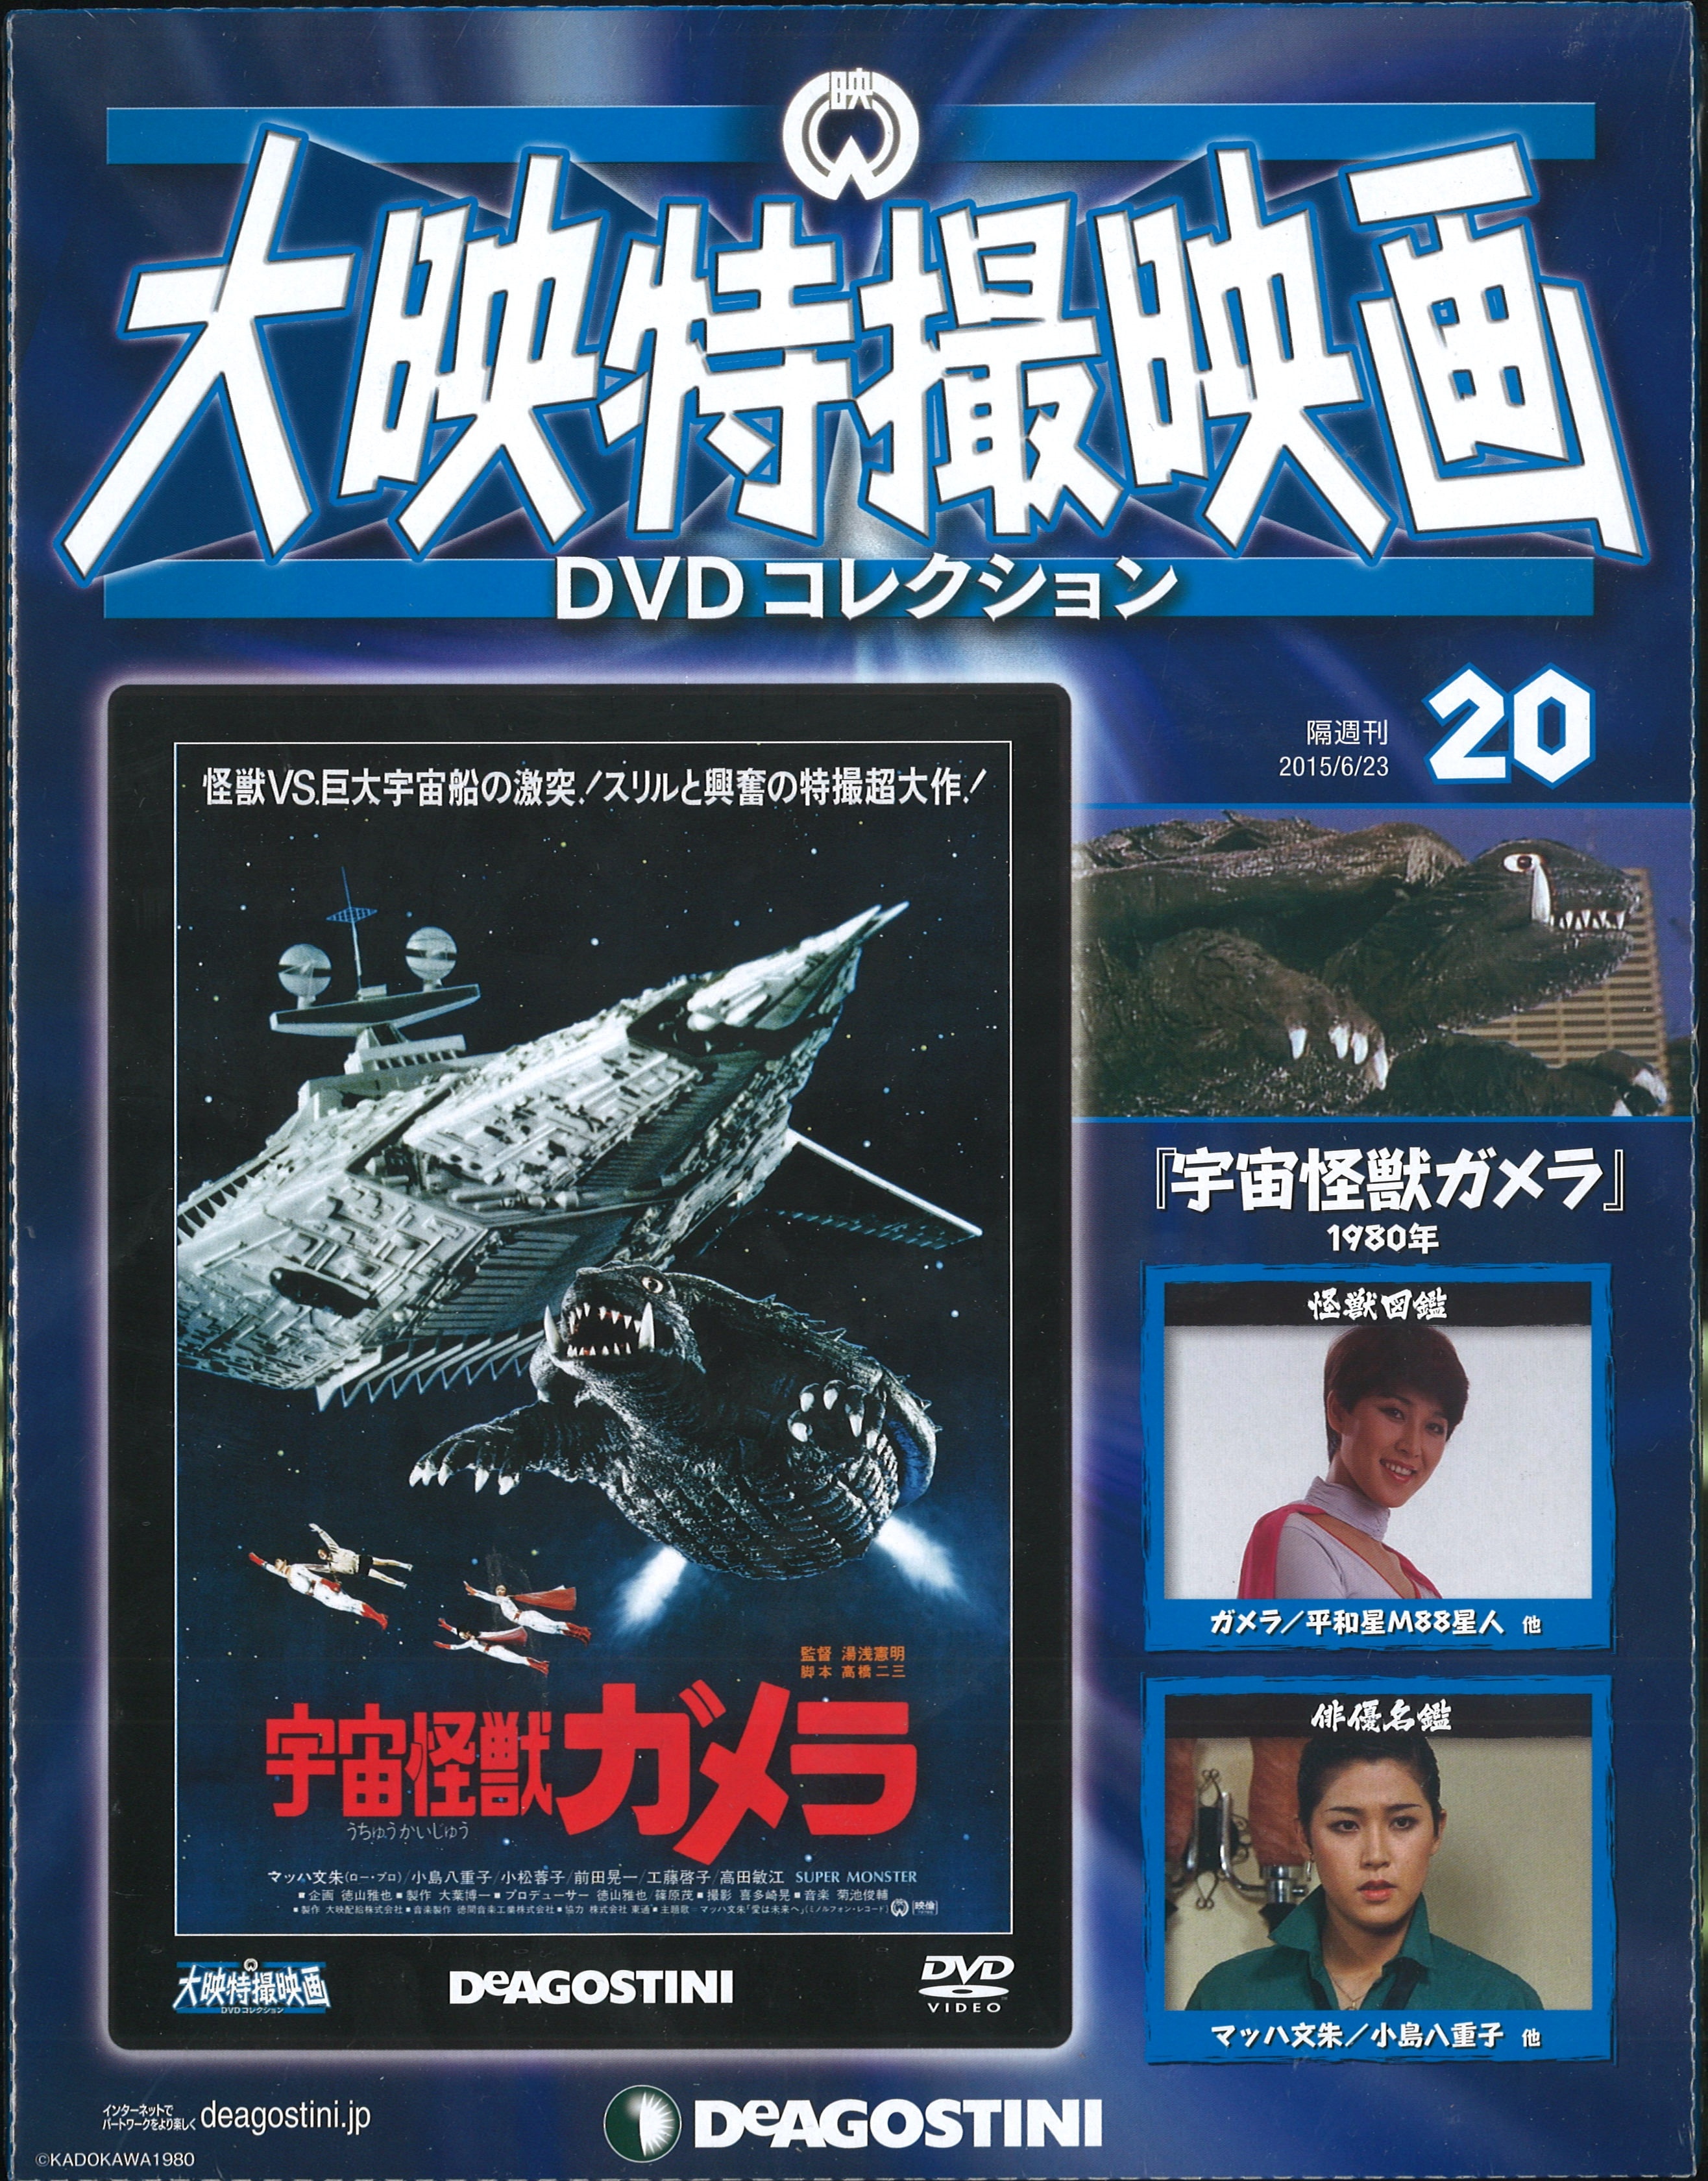 DVD>宇宙怪獣ガメラ/大映特撮映画DVDコレクション 20*未開封